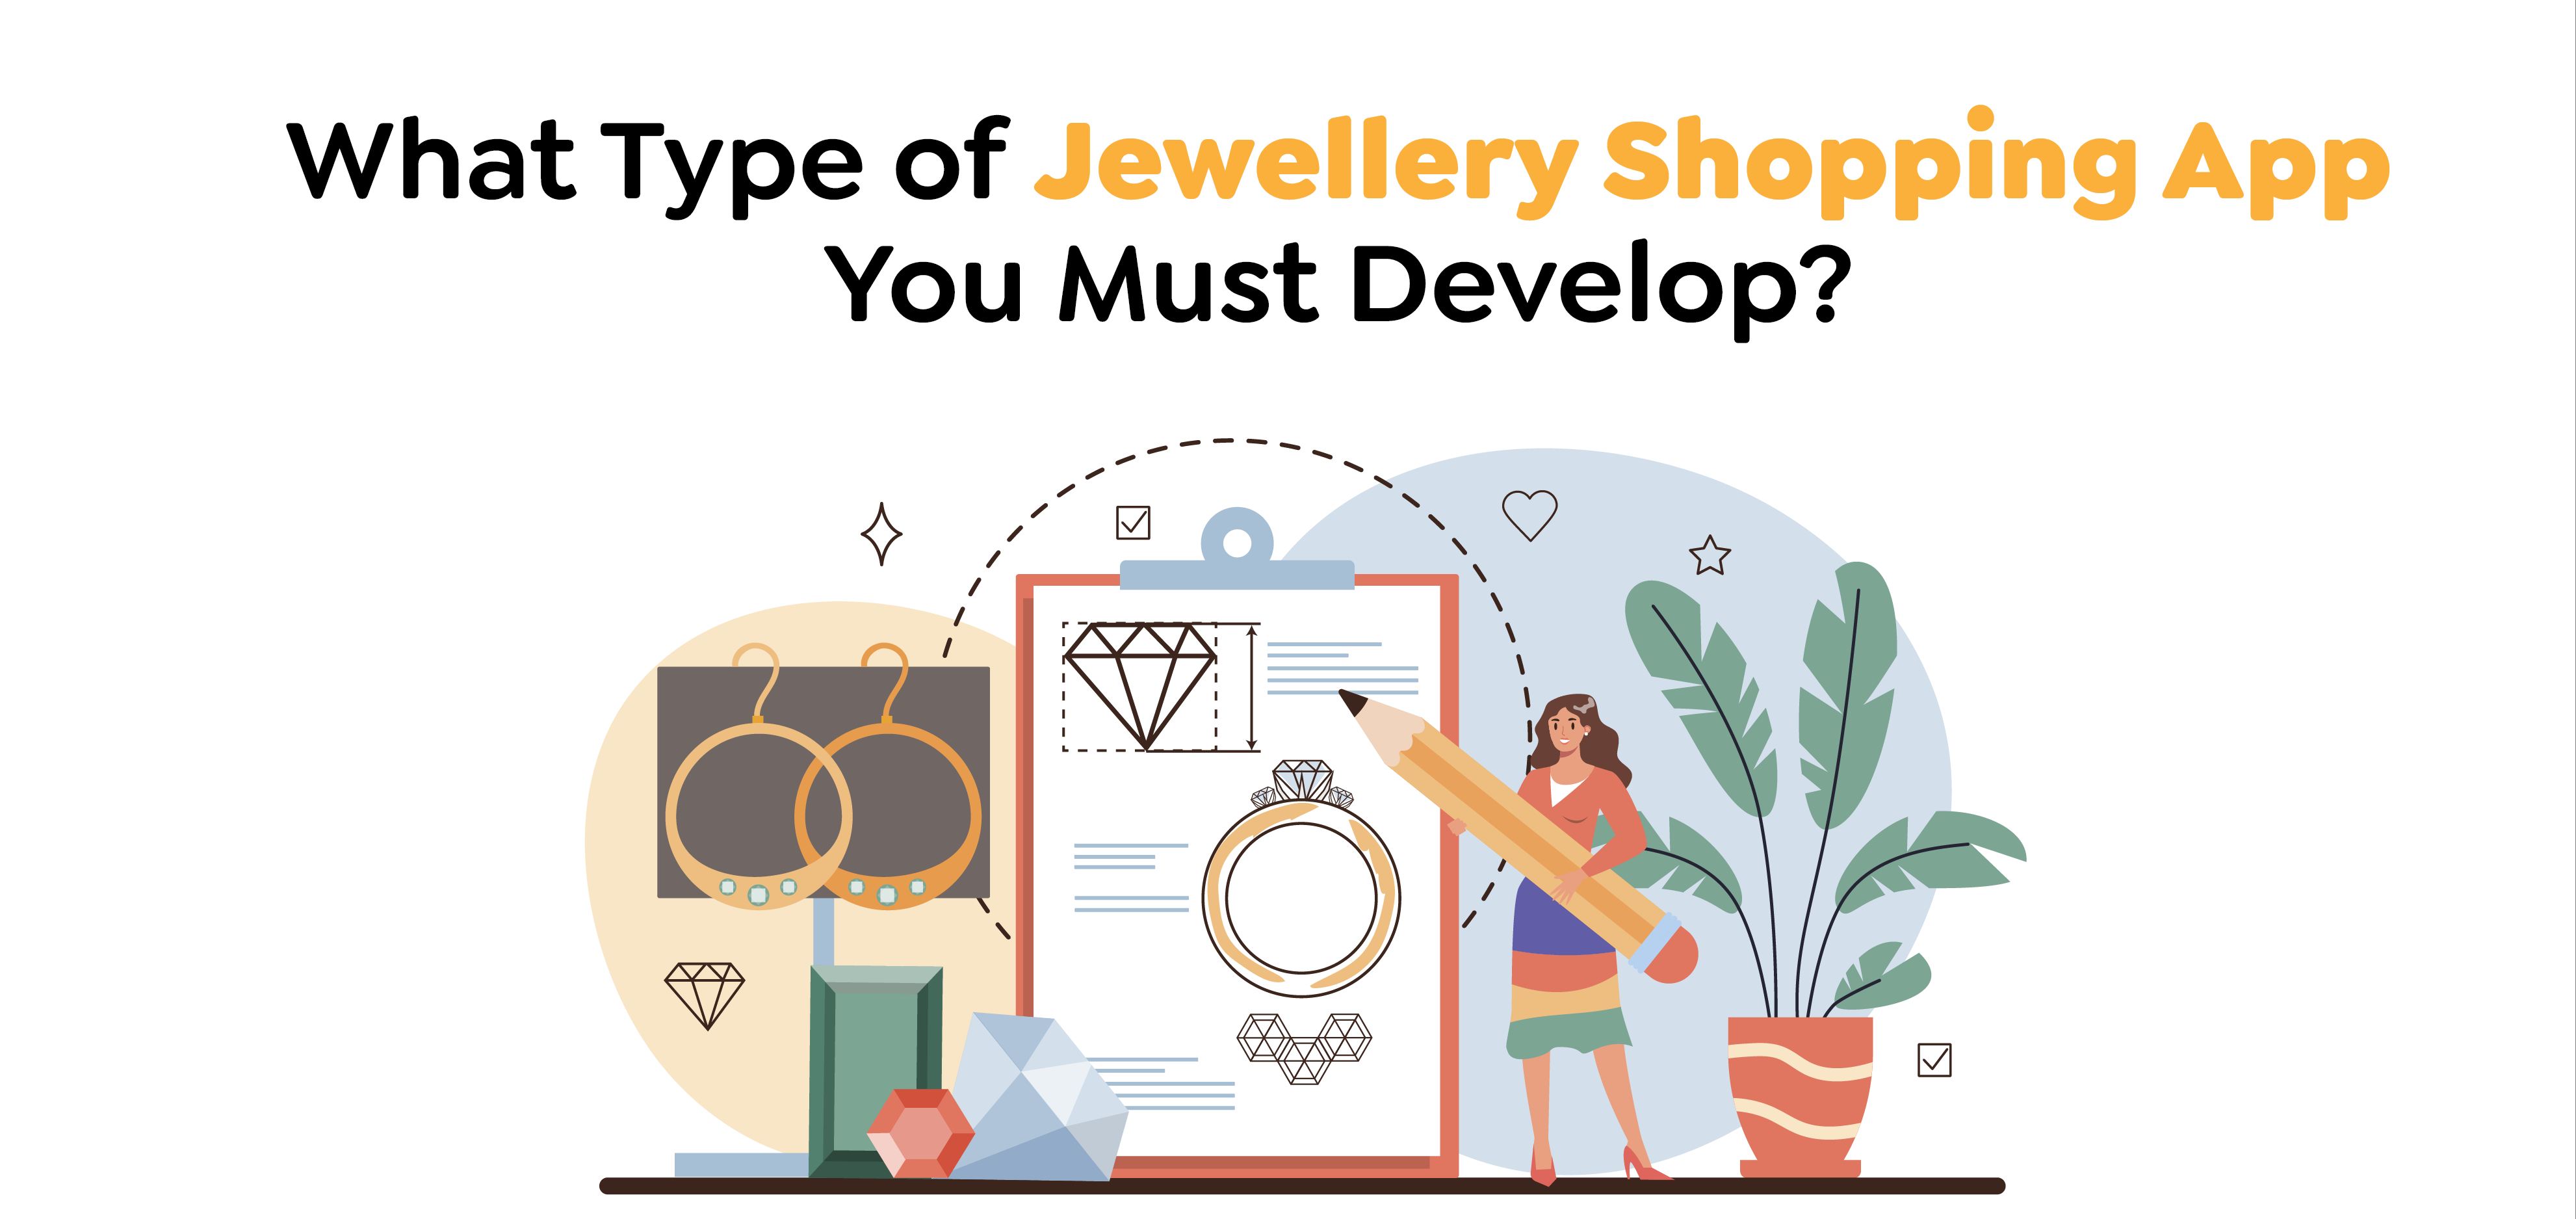 Type of Jewellery Shopping App